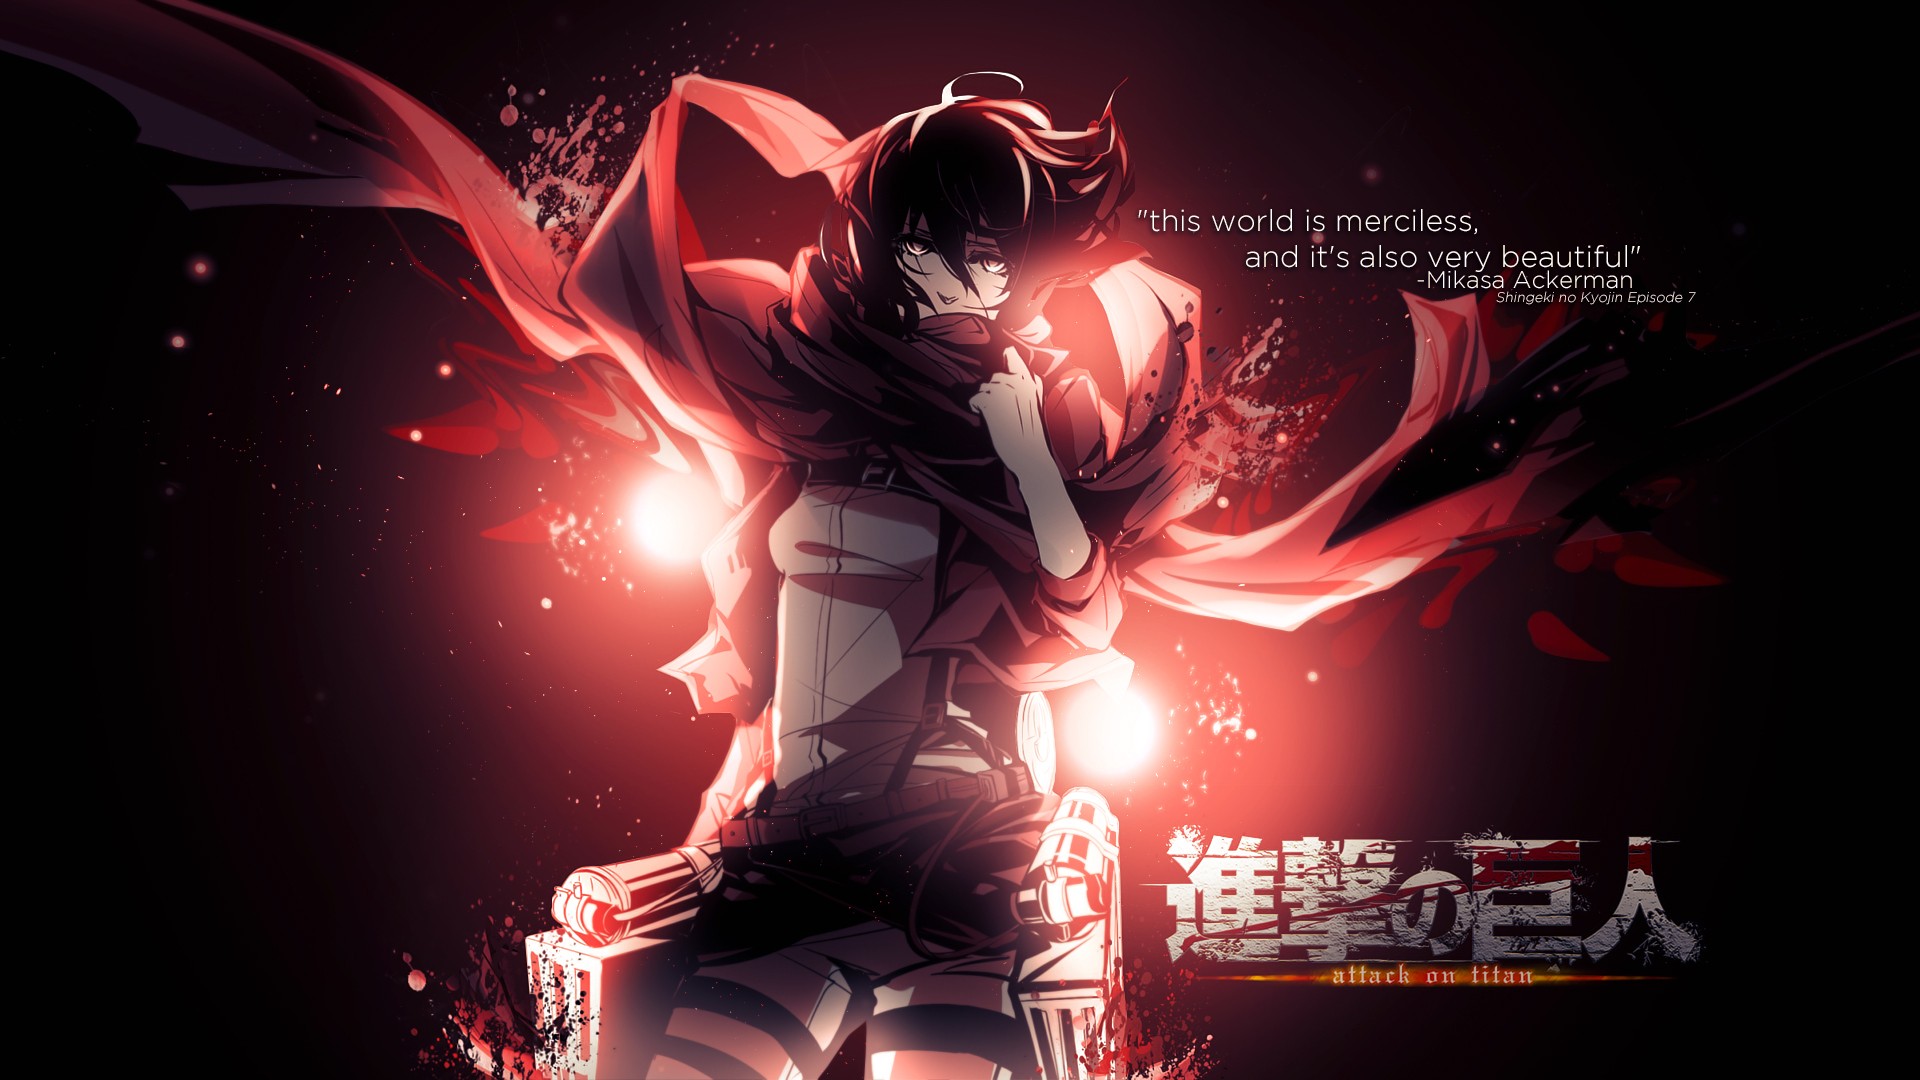 Anime 1920x1080 anime Shingeki no Kyojin Mikasa Ackerman anime girls red women red background standing